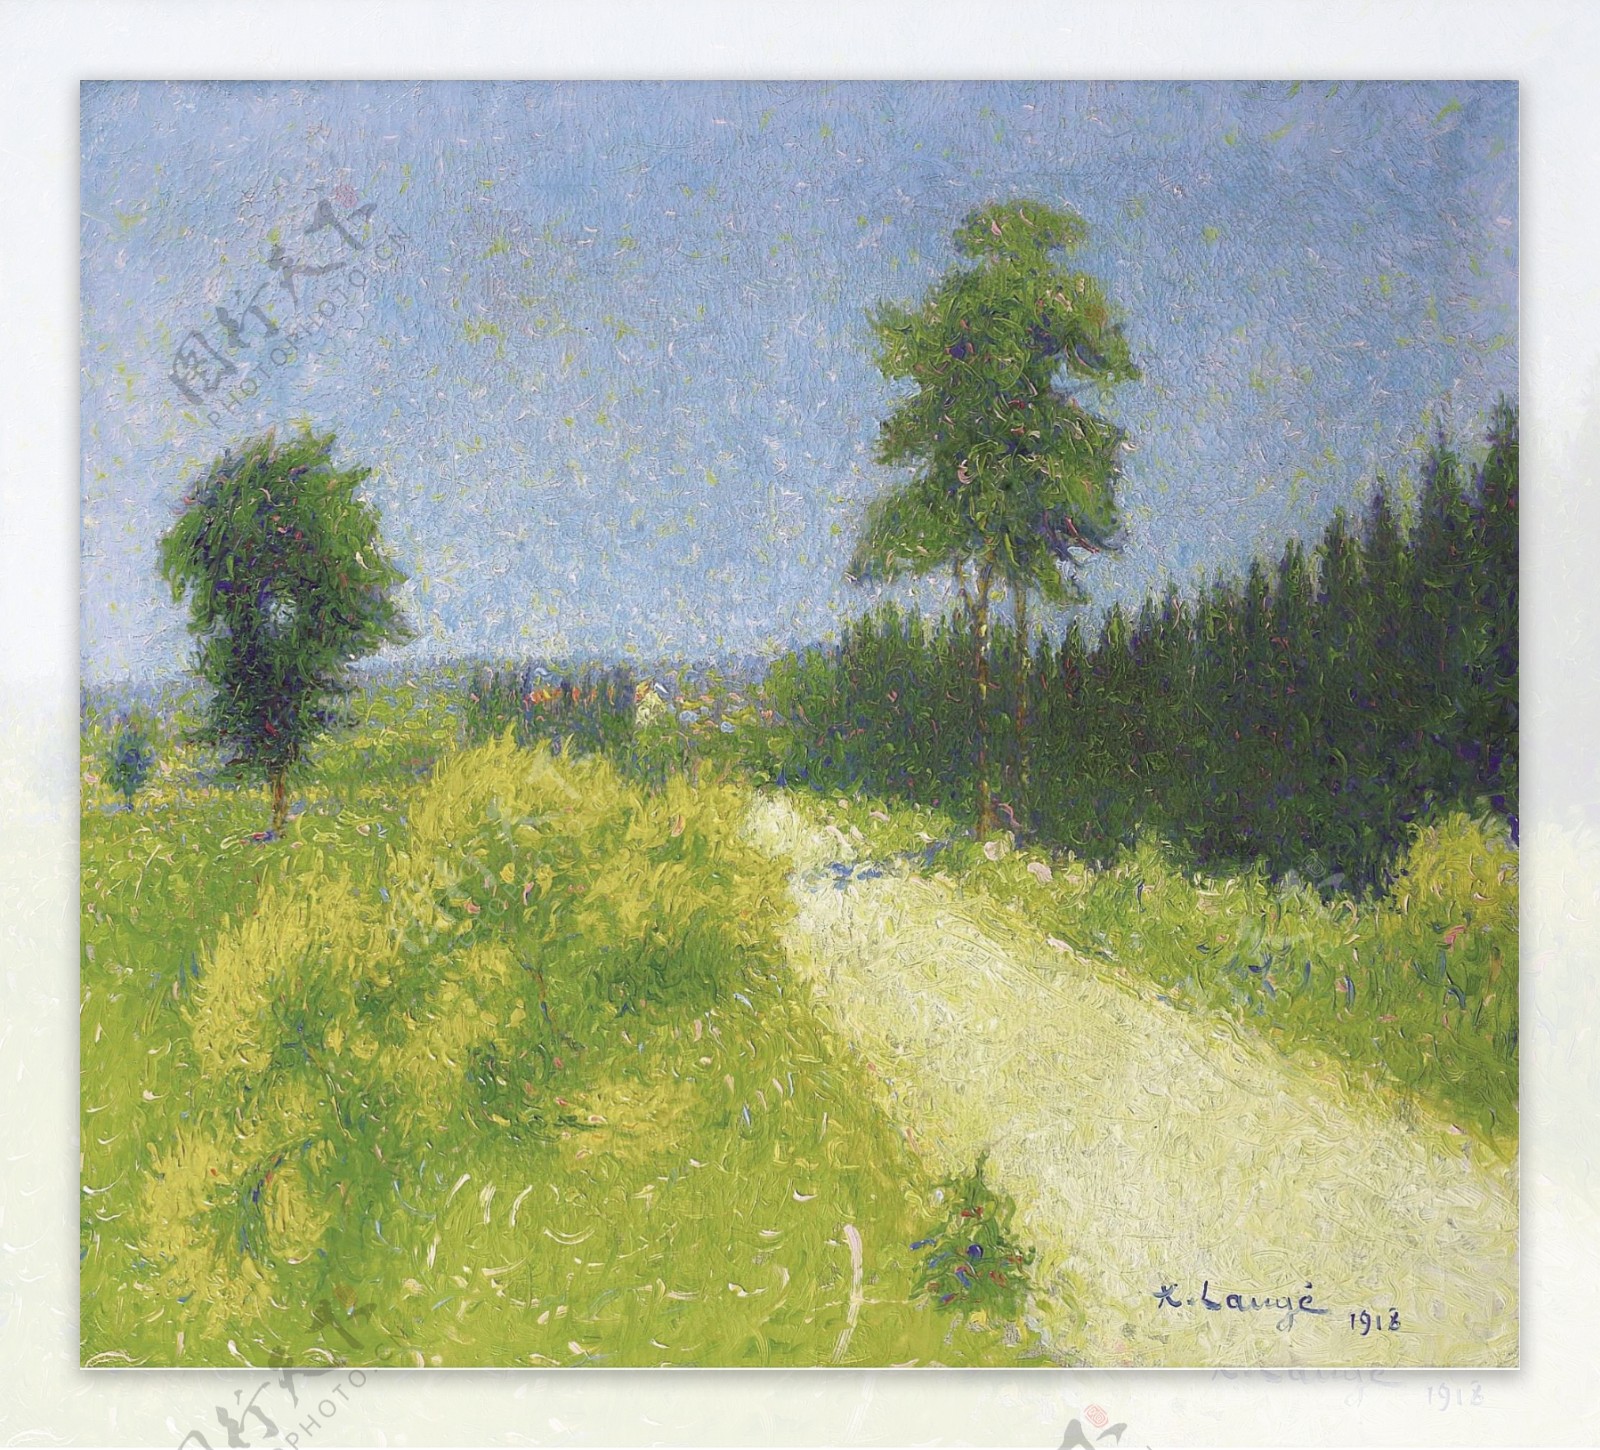 AchilleLaugeTheRoadofBelvezenearRevesibleStation1918法国画家阿希尔拉格AchilleLauge印象派风景自然田园油画装饰画